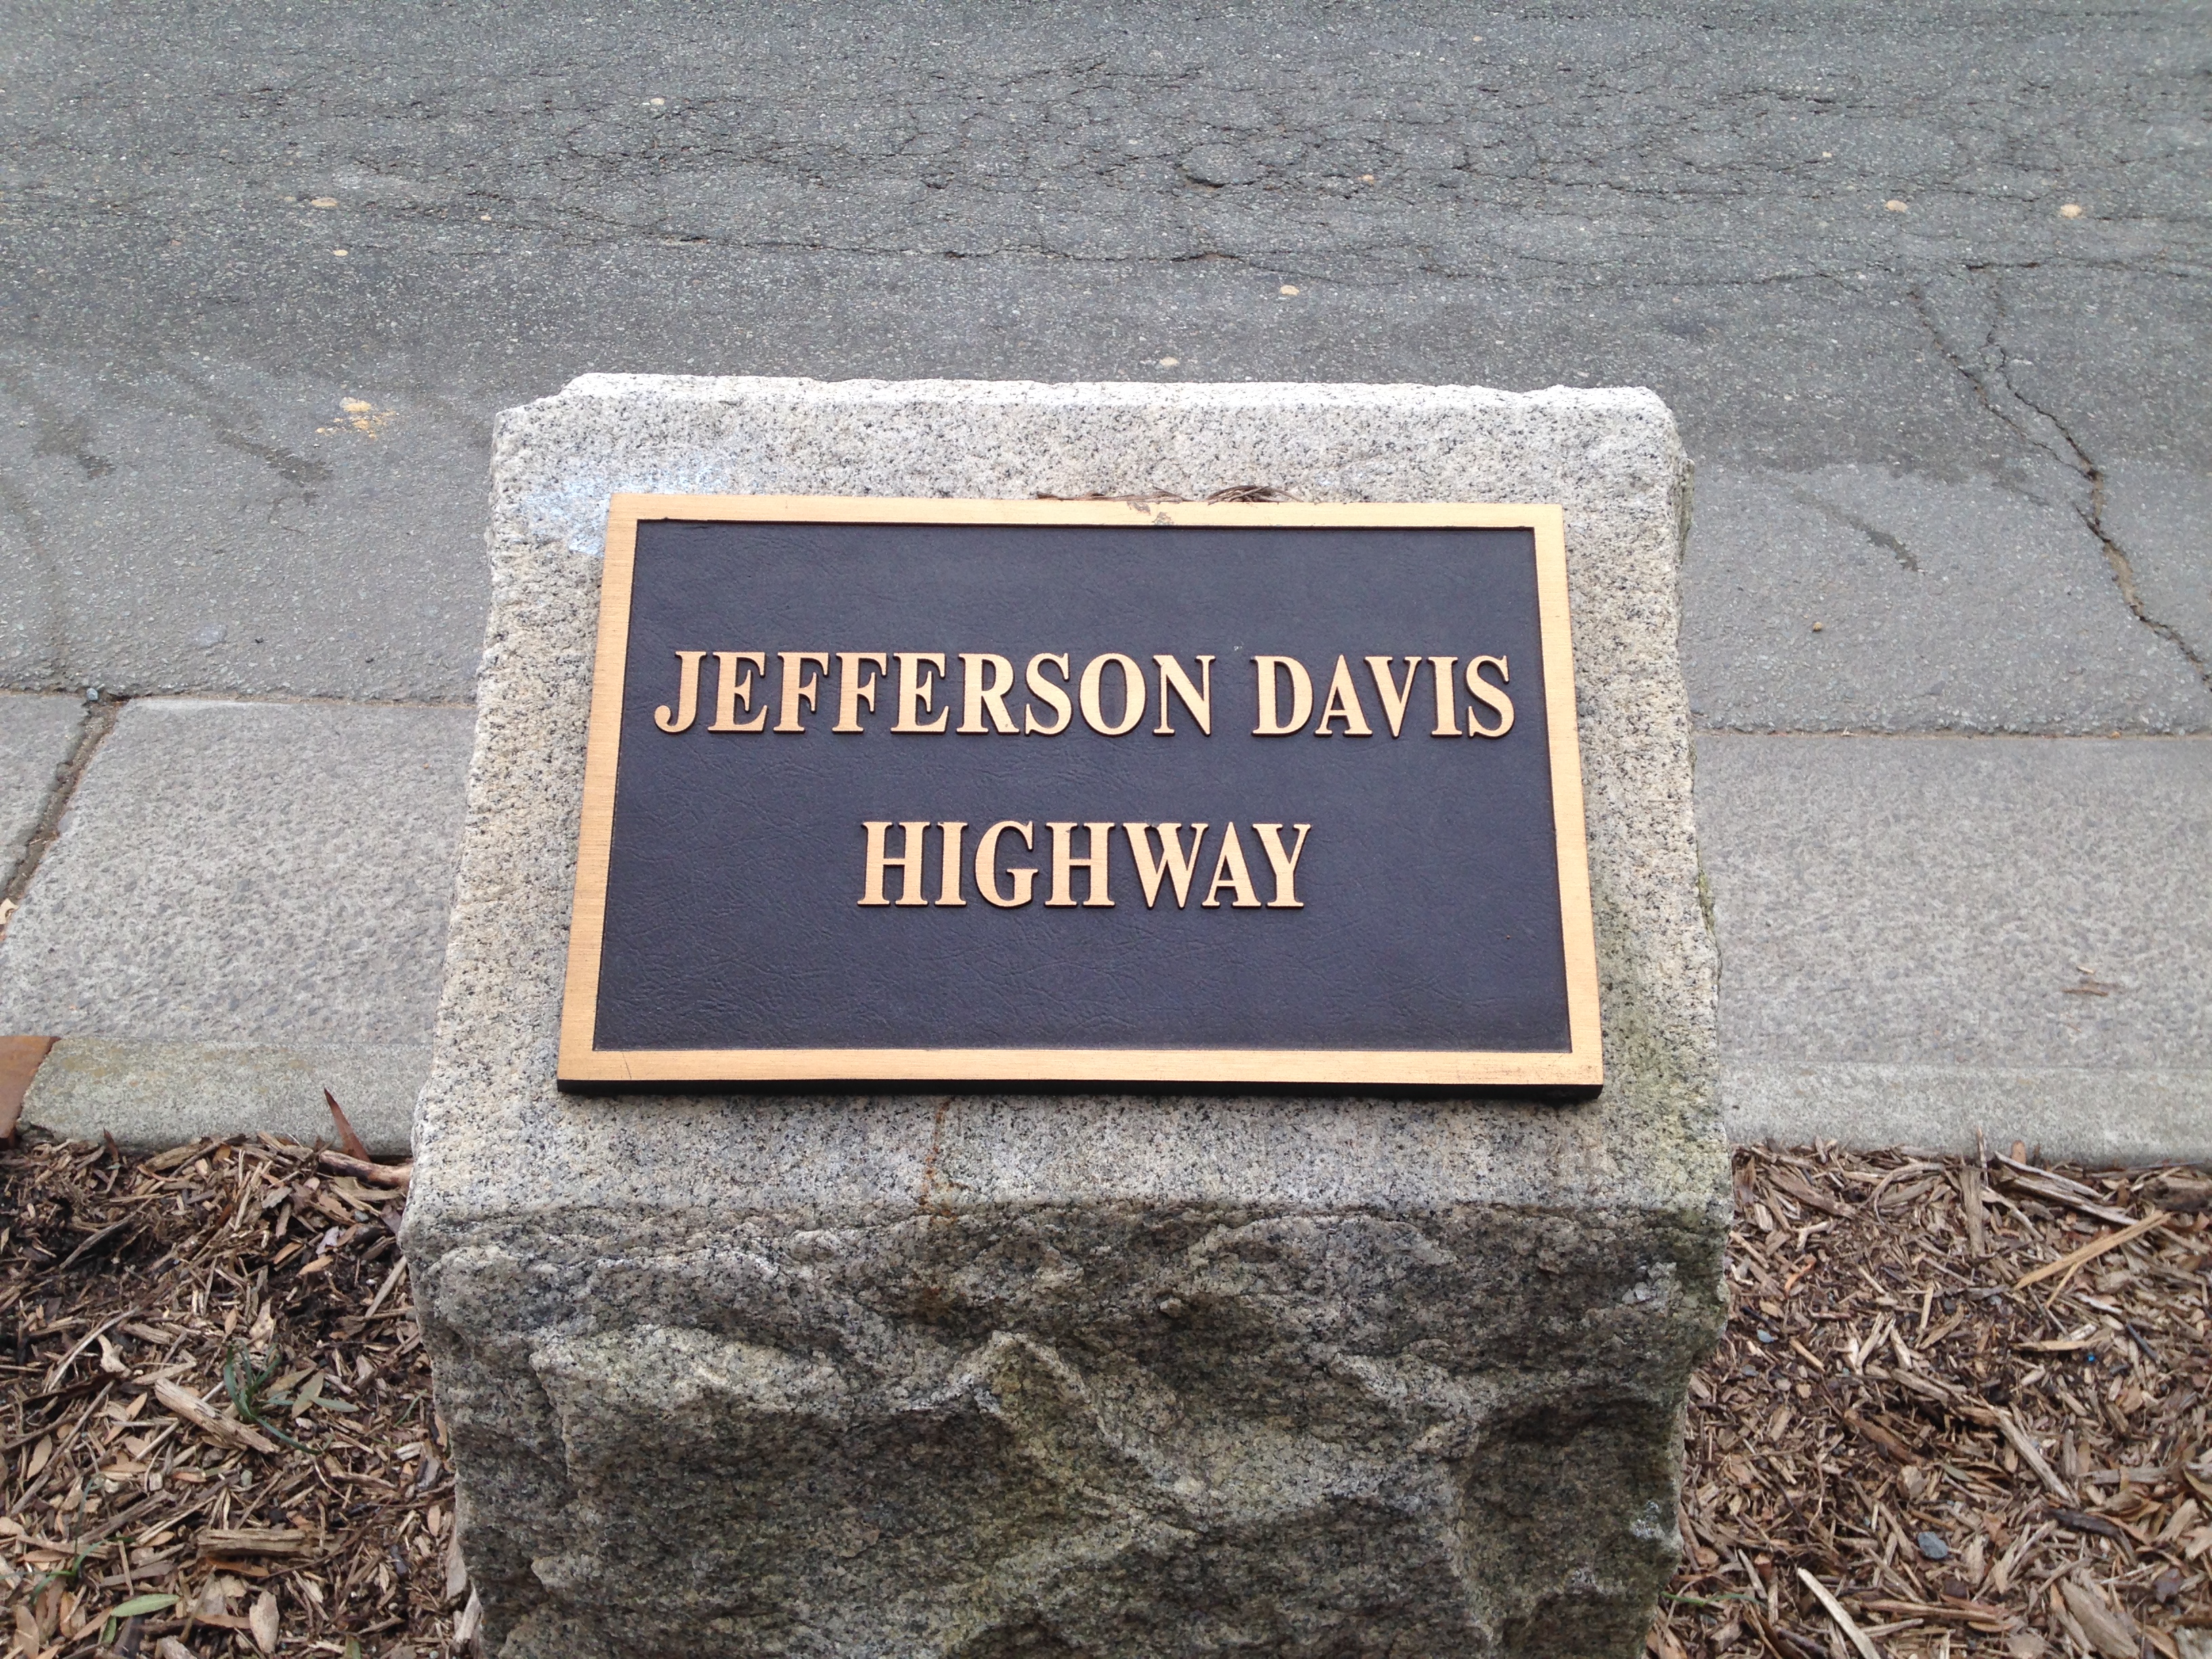 Orange County Repeals Jefferson Davis Highway Designation